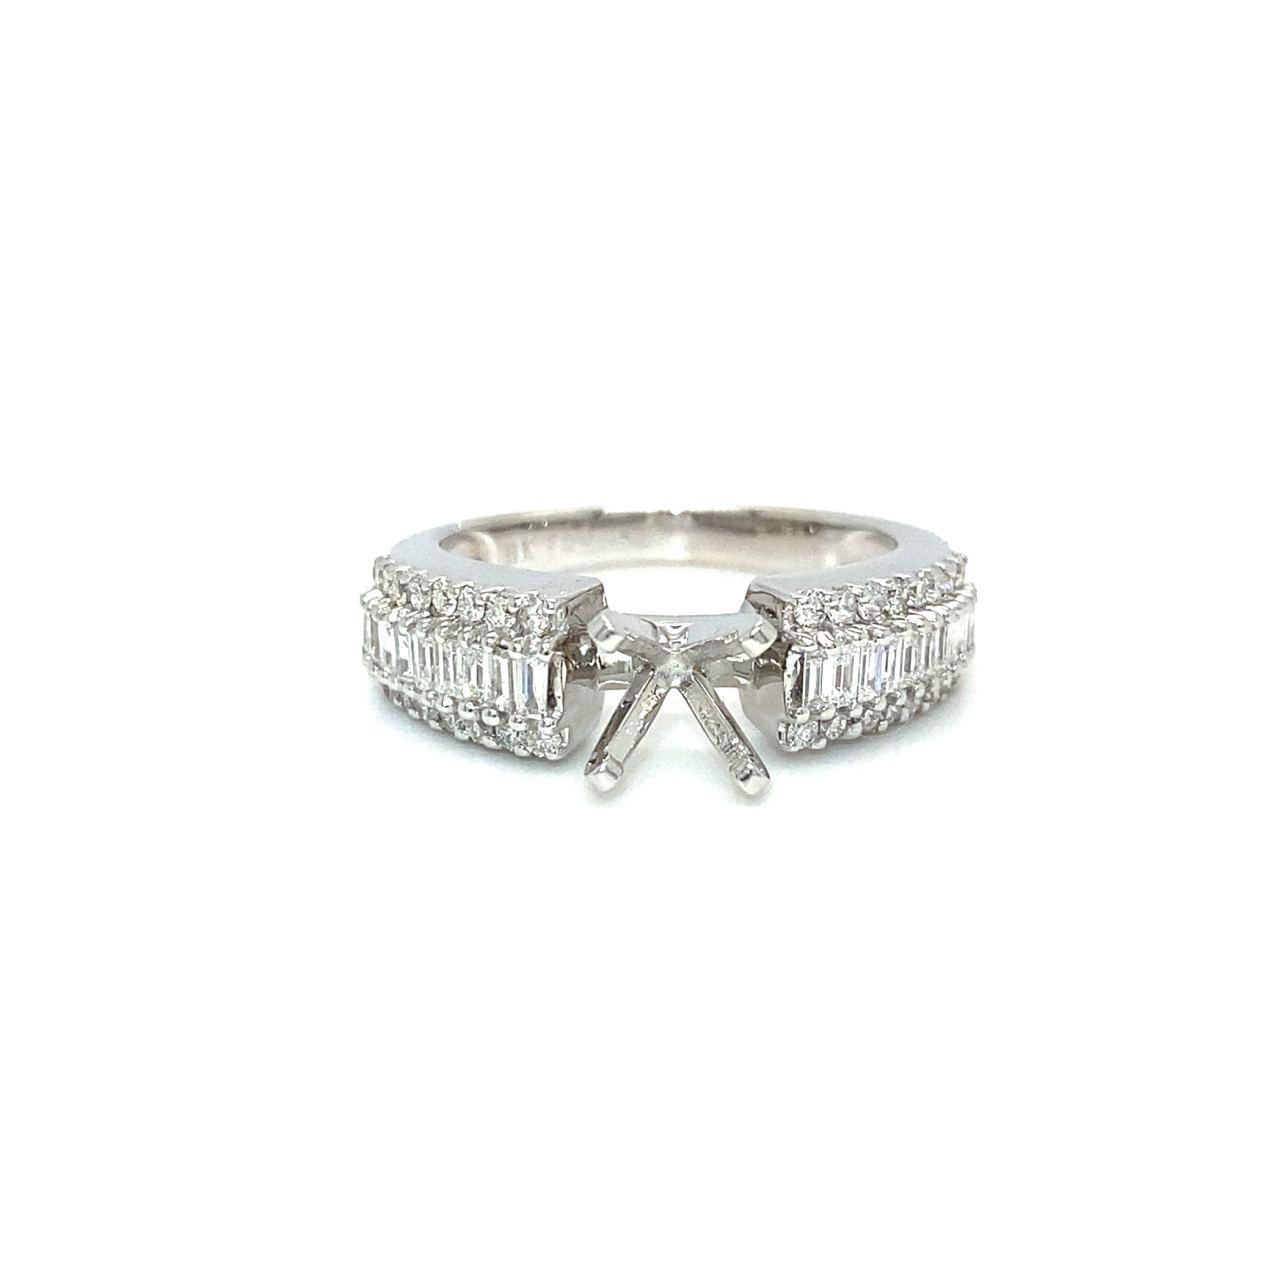 18K White Gold Baguette Side Prongs Diamond Ring Mounting